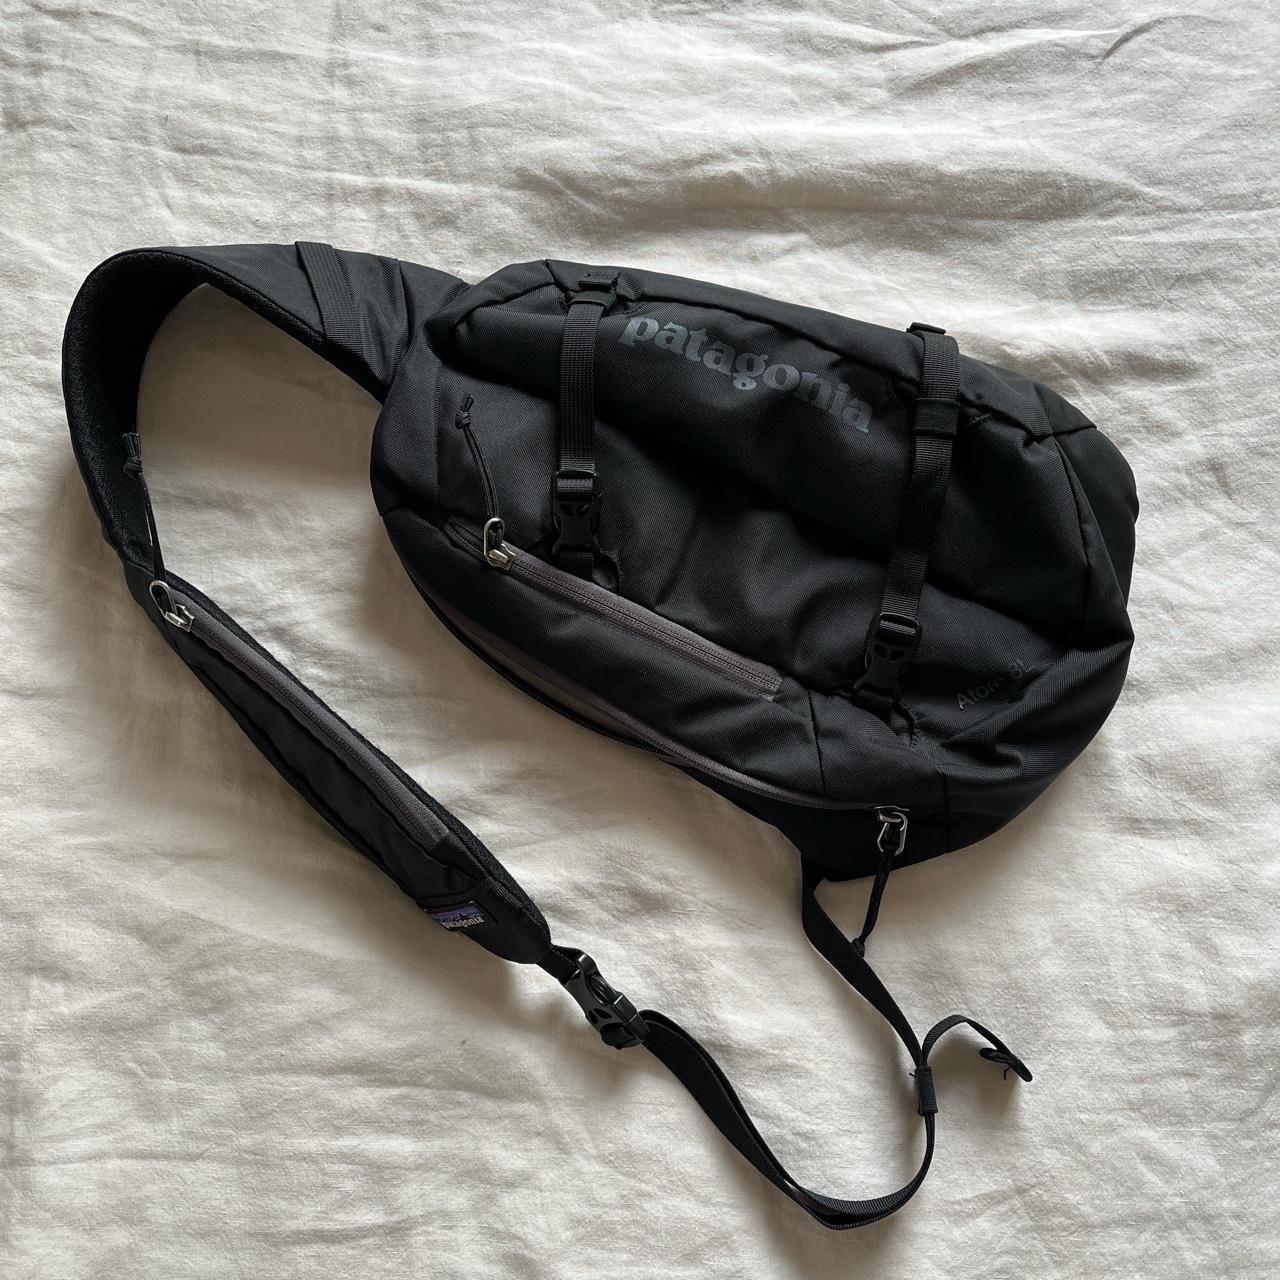 Patagonia Atom 8L sling bag - Depop